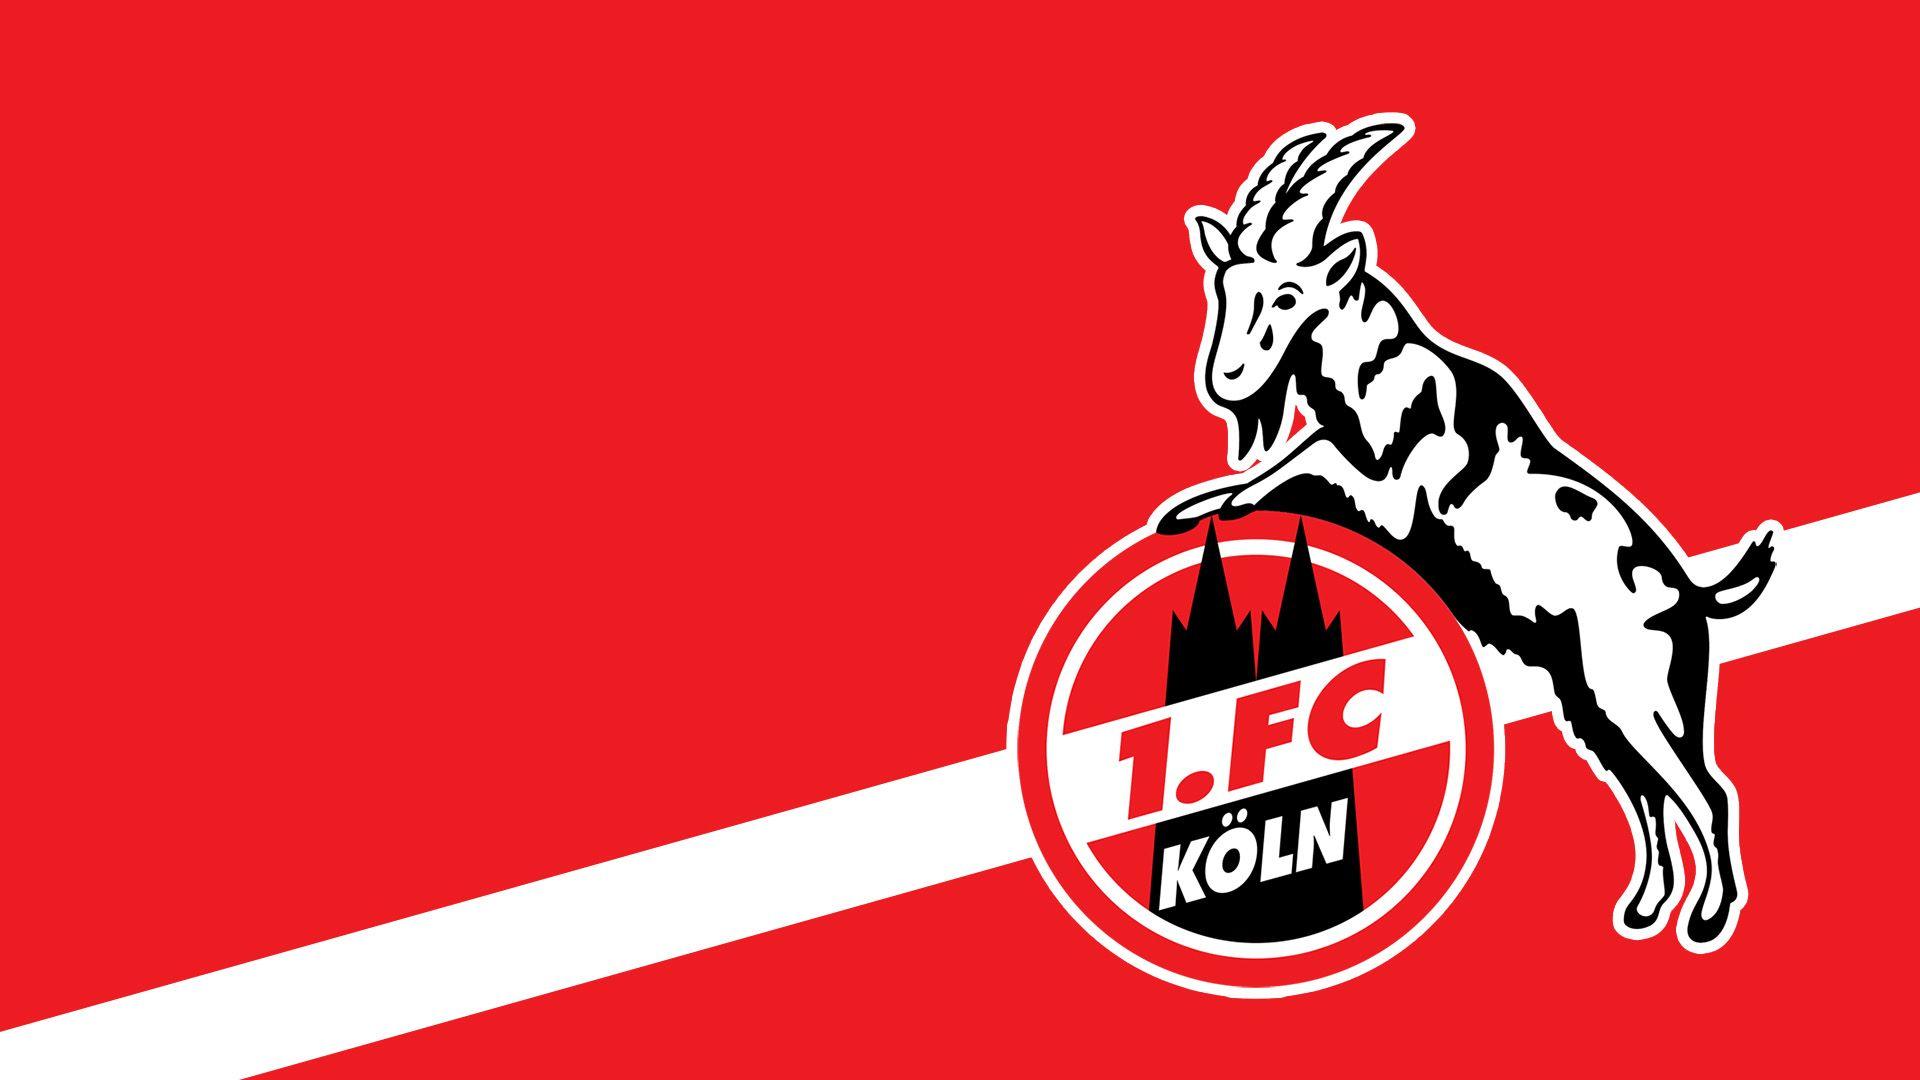 1 Fc Koln Logo - LogoDix